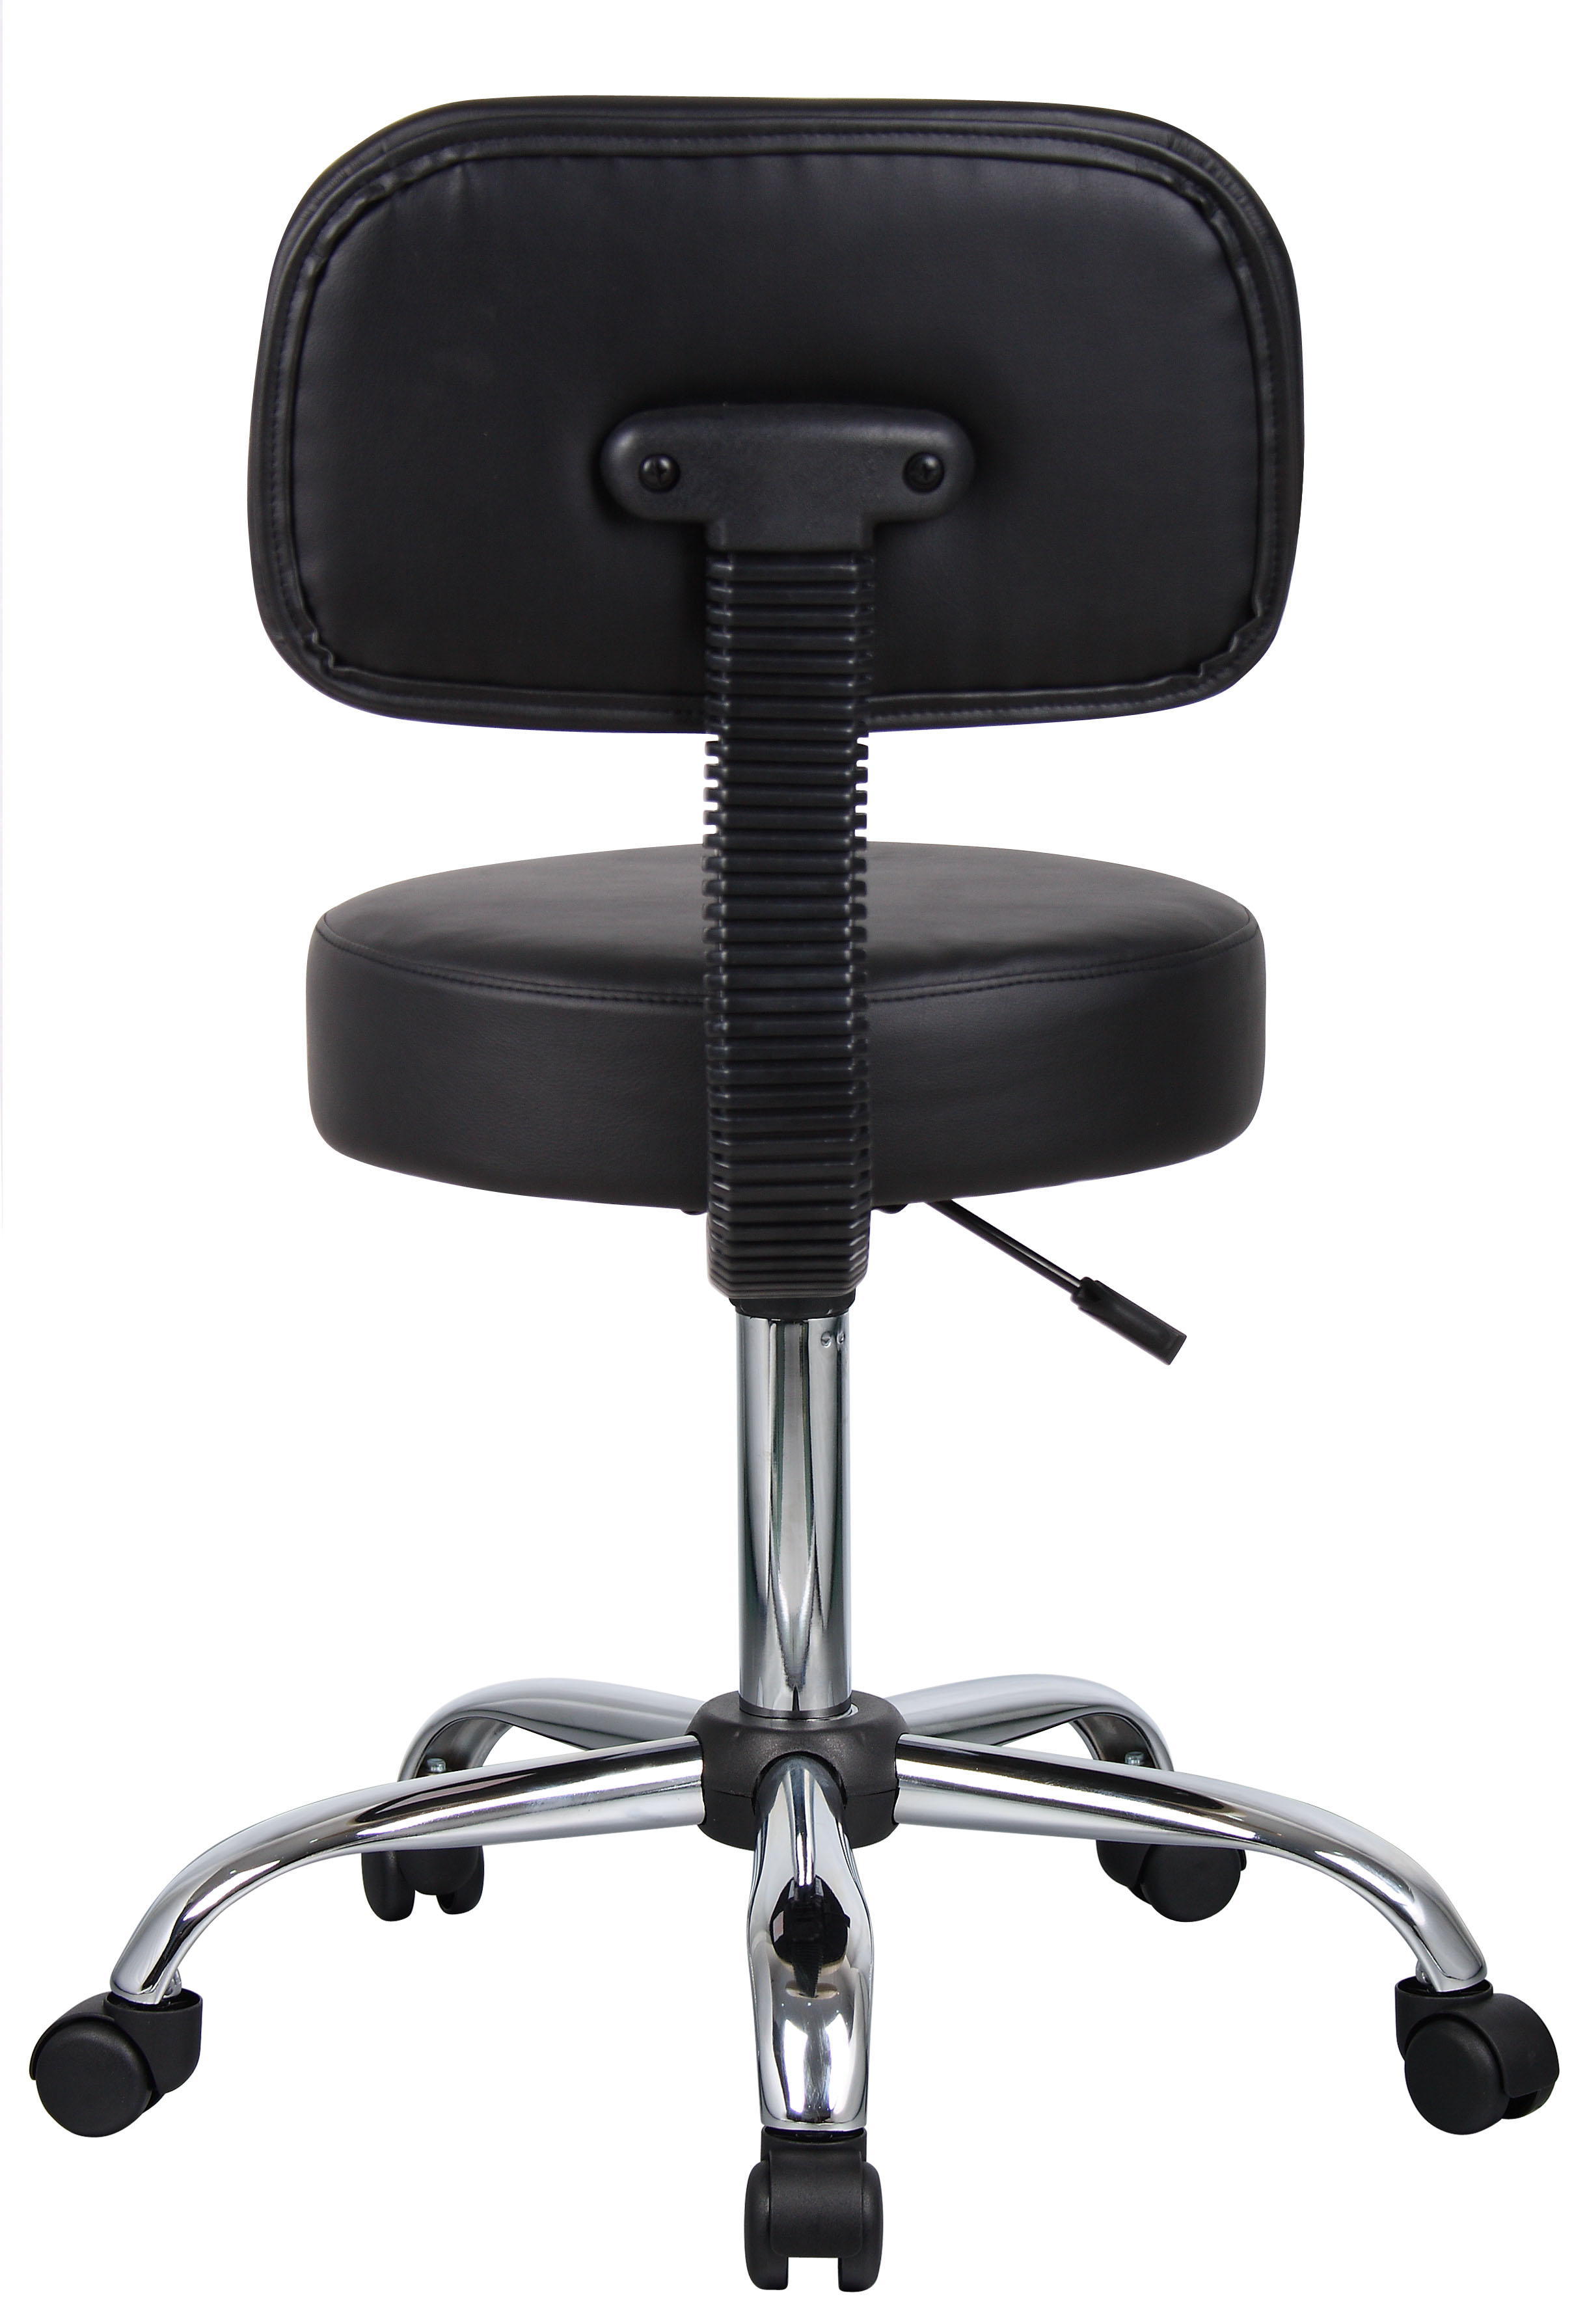 Boss Office & Home B245-BK Adjustable Medical Spa Rolling Desk Stool with Back, Black - image 5 of 7